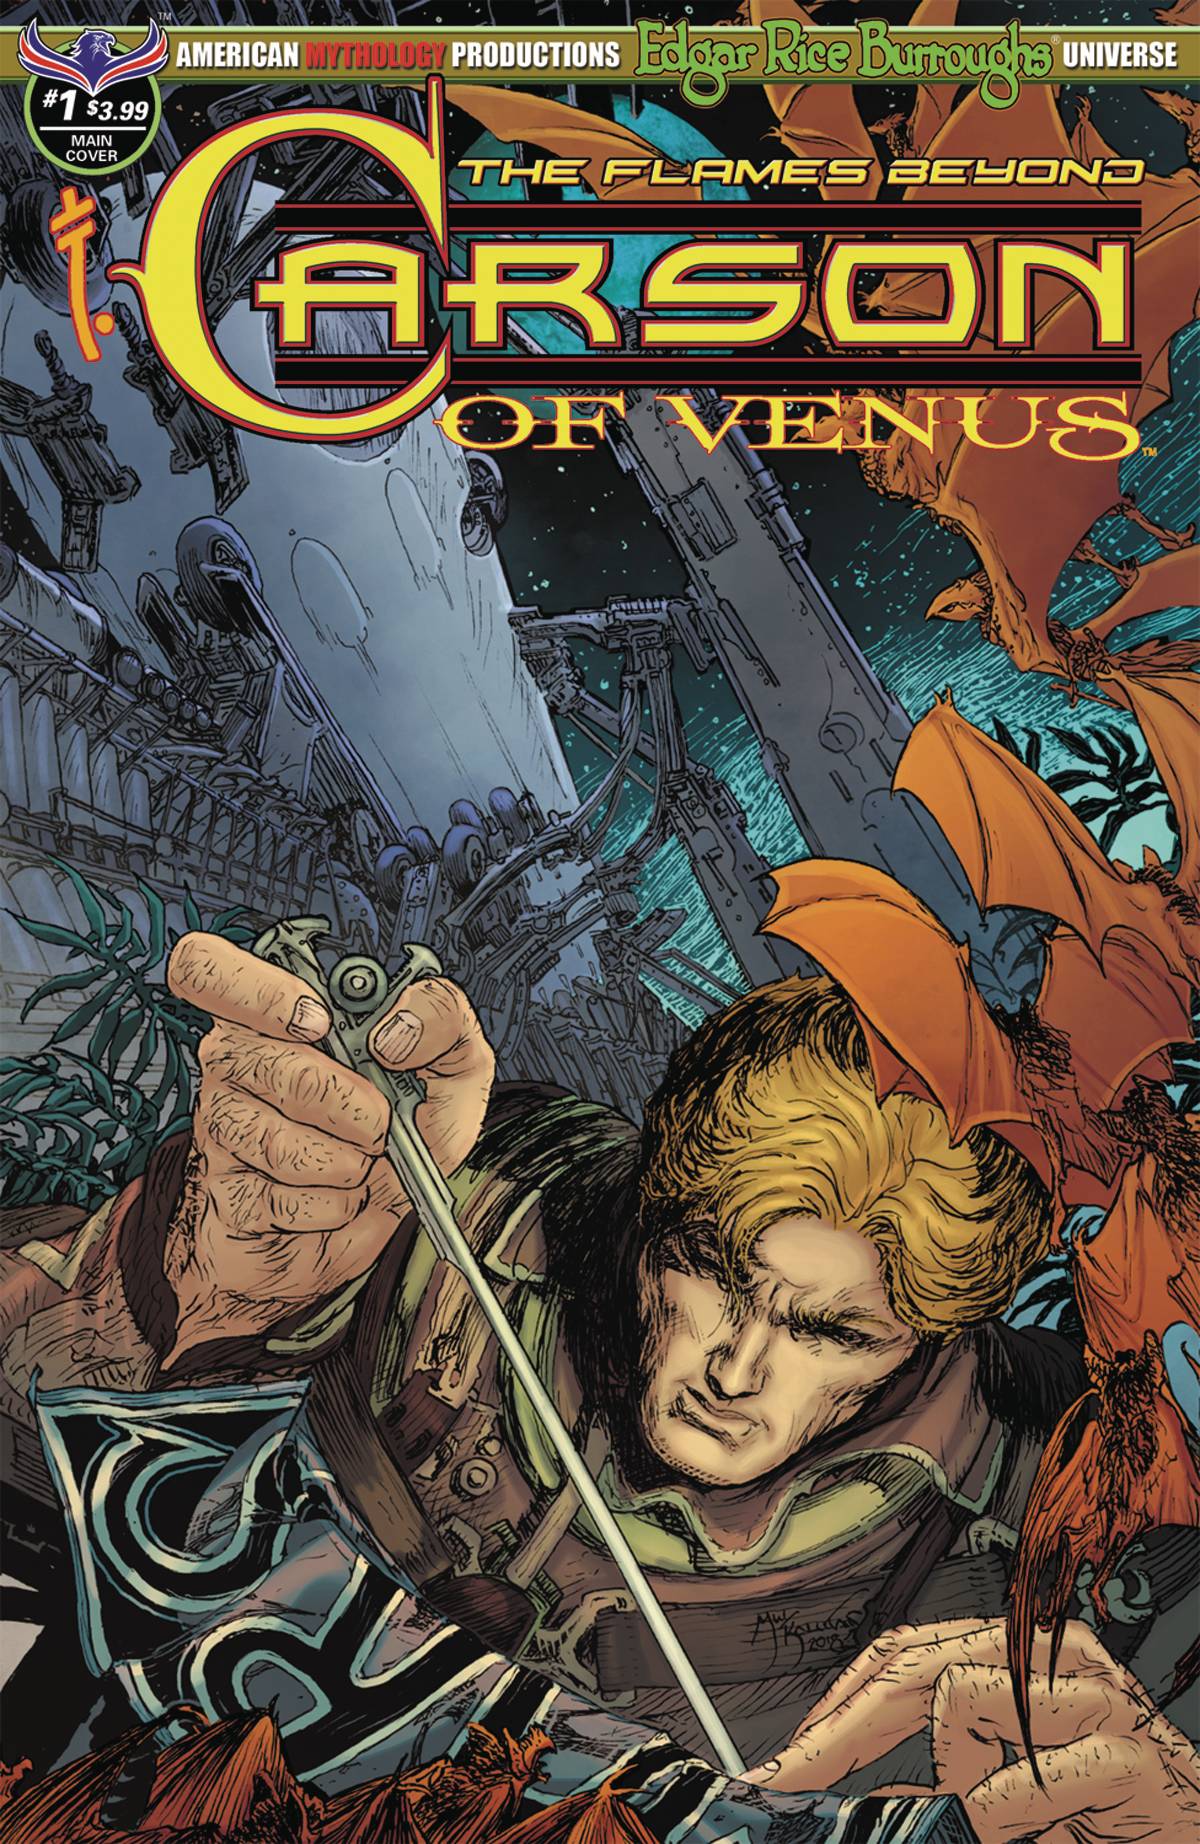 Carson of Venus Flames Beyond #1 Legendary Kaluta Cover